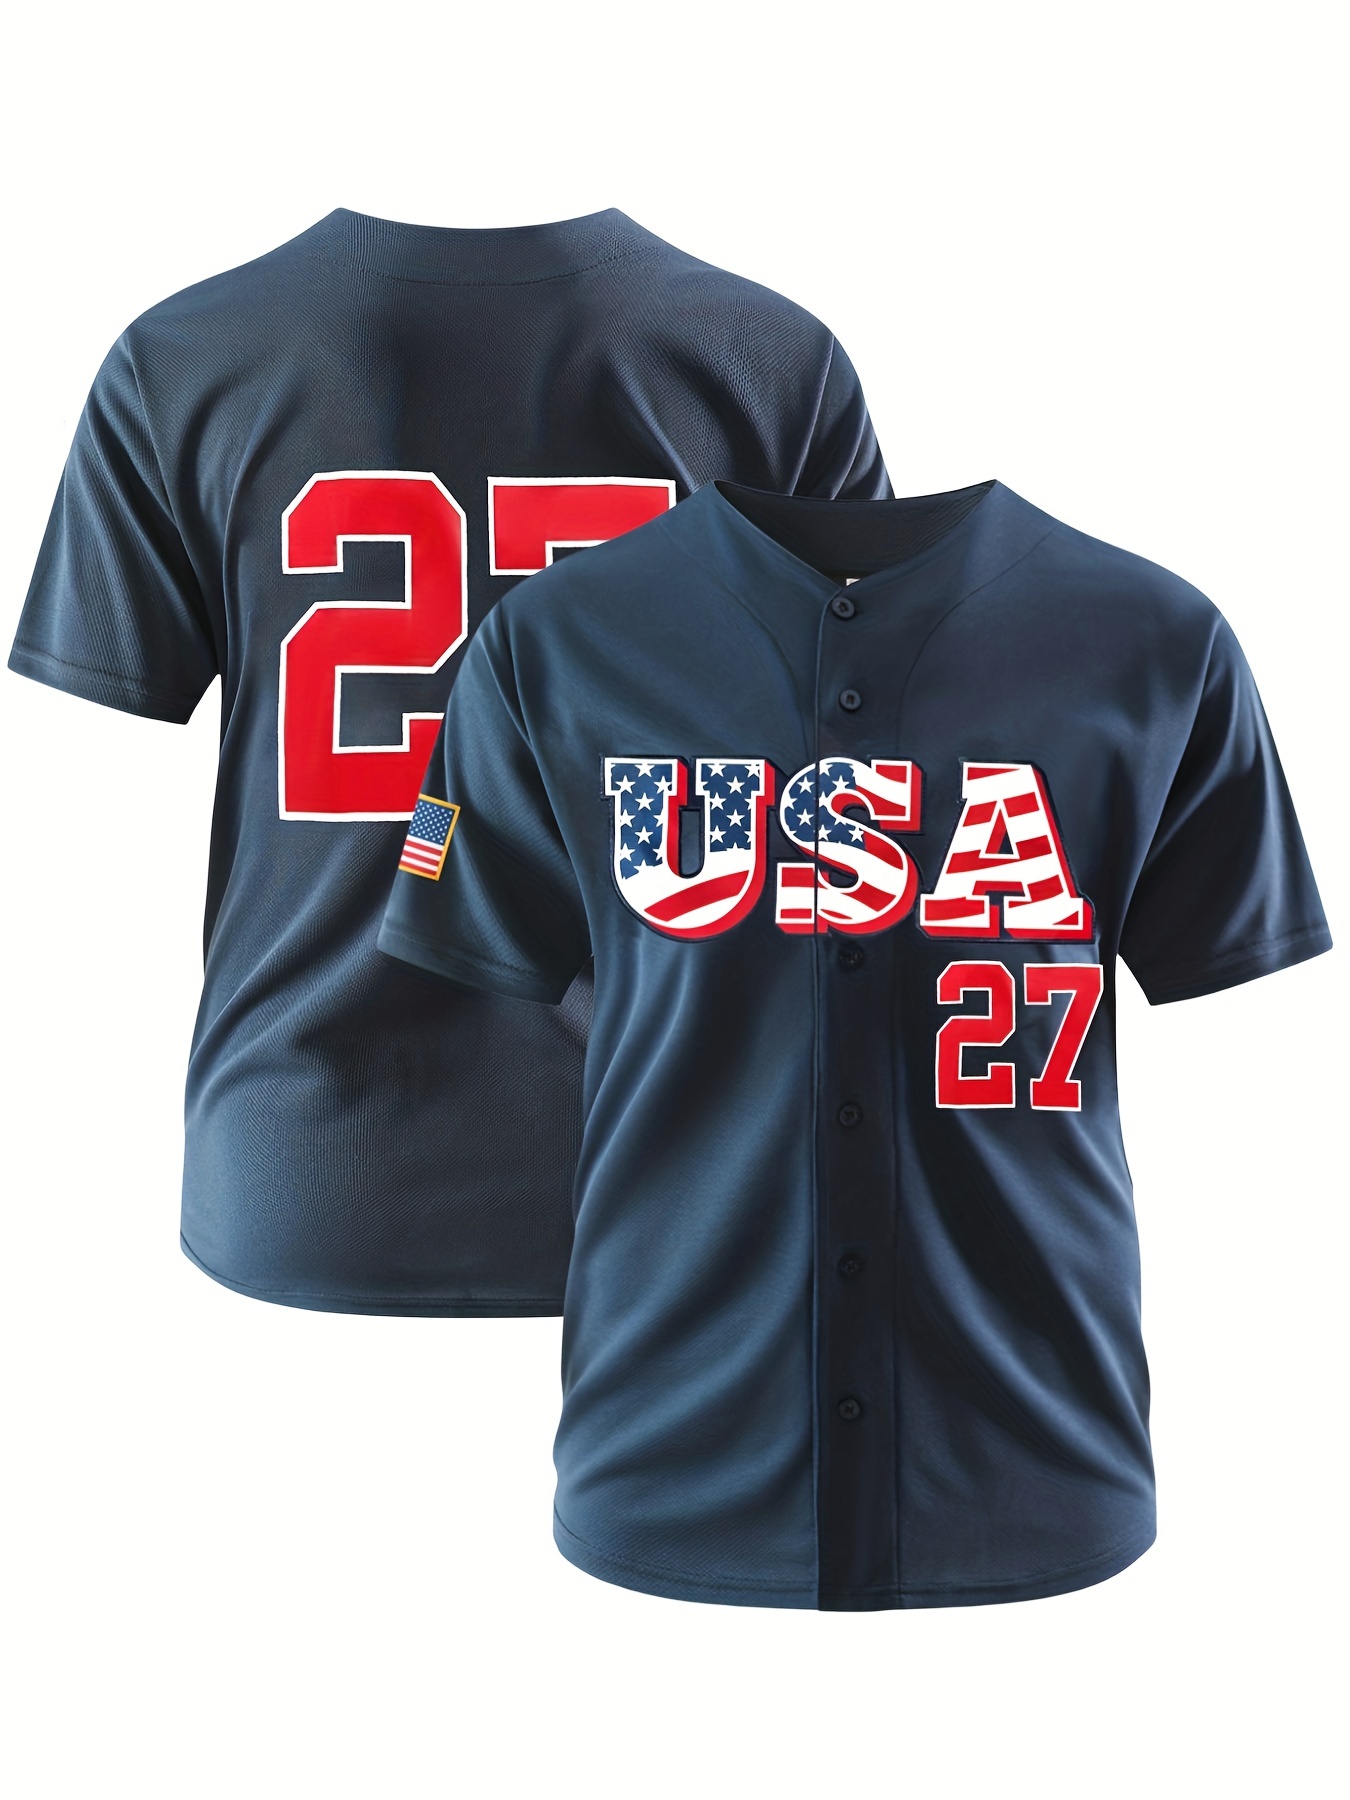 27 B jersey ideas  mens outfits, baseball shirts, baseball jersey men